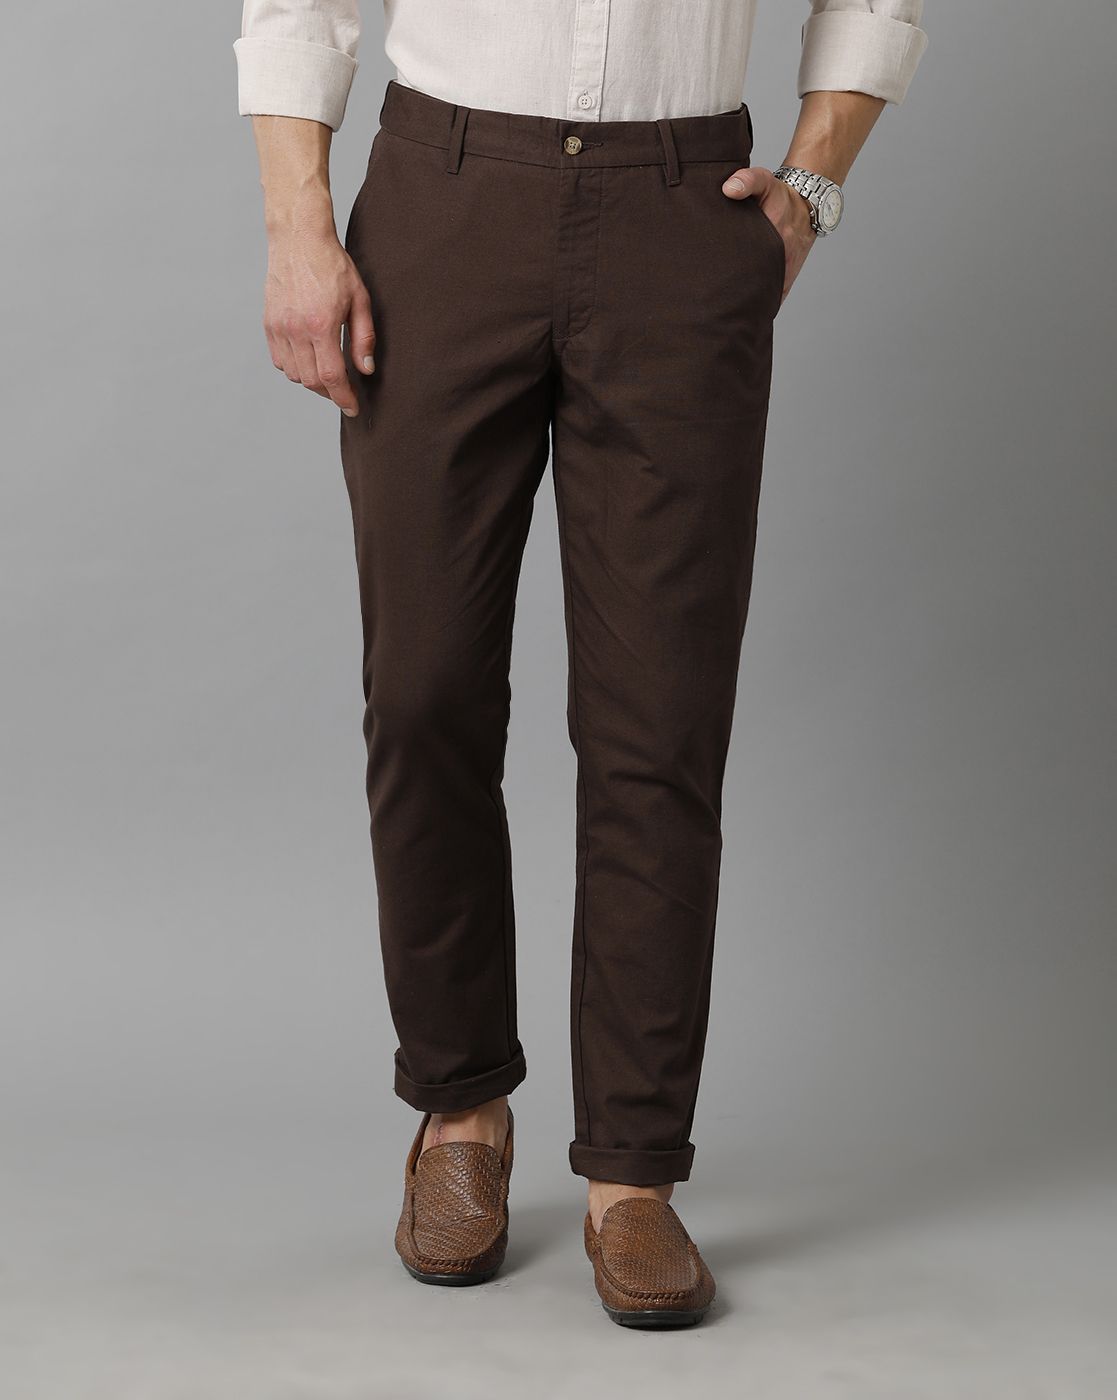 Pants Jumper for Men Loons Trousers Maternity Linen Trousers Khaki Jeans  for Men Dark Brown Trousers Men at Amazon Men's Clothing store